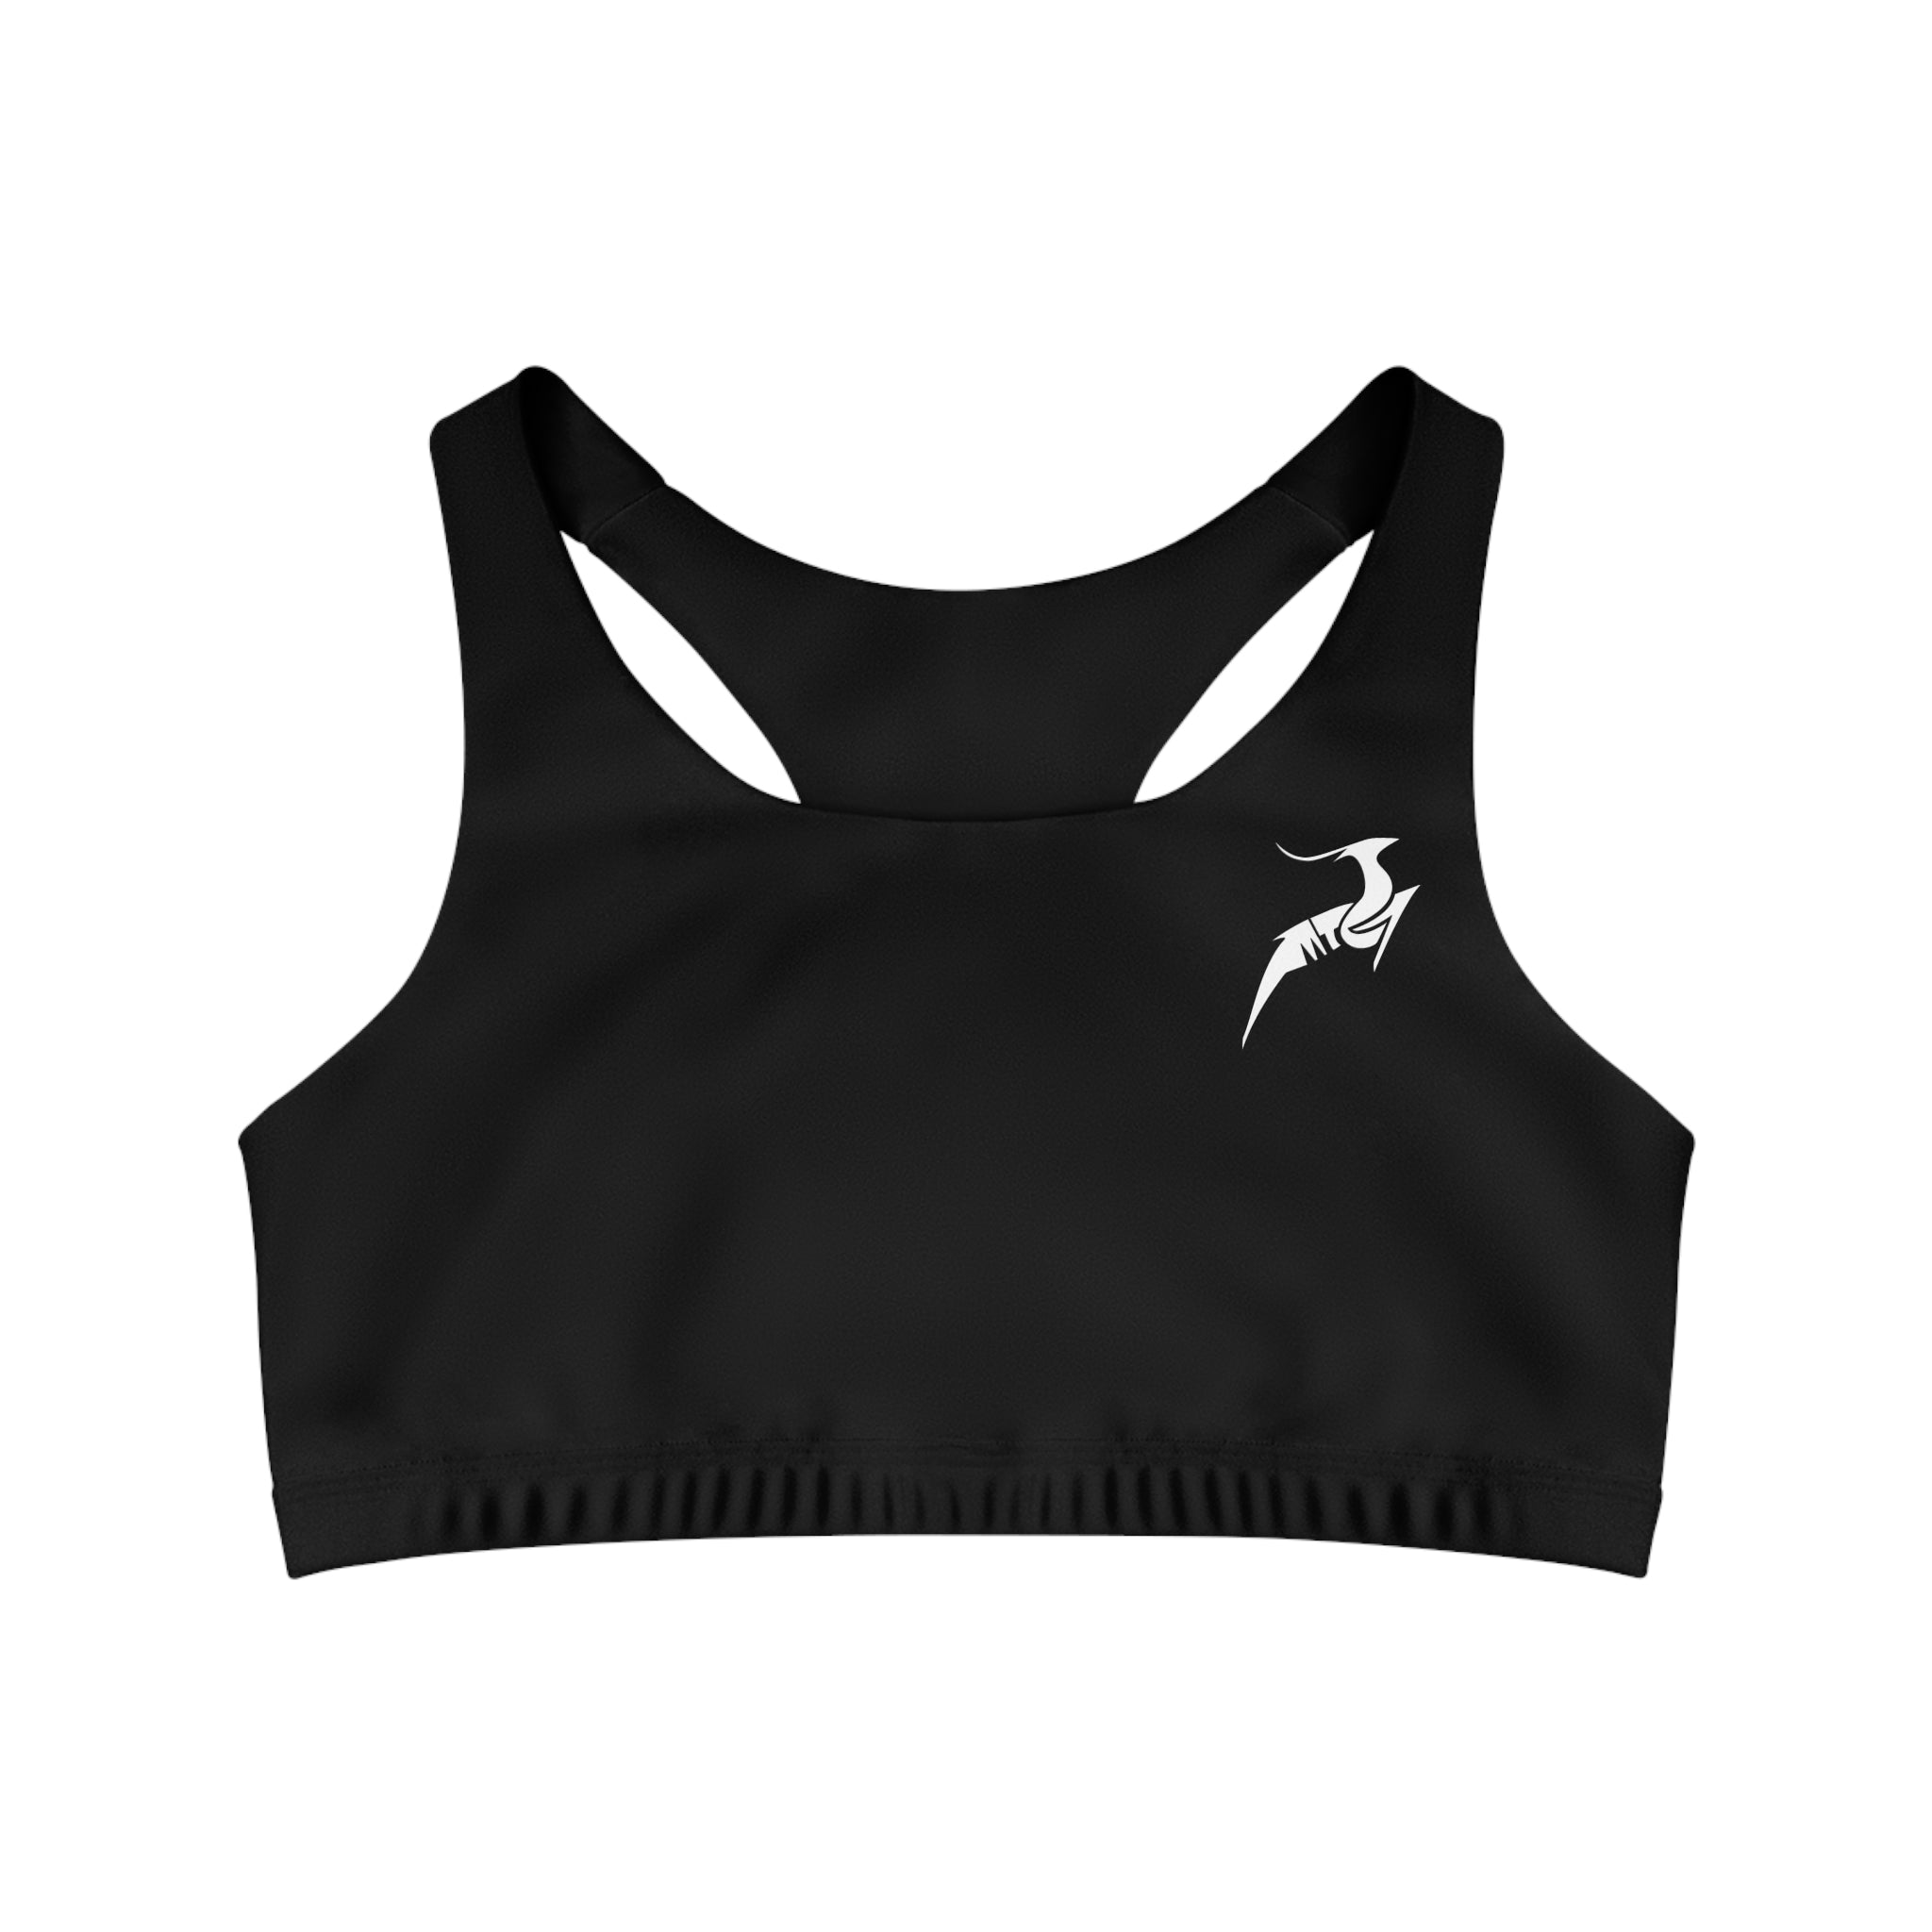 Laminated sports bra in black - Oseree